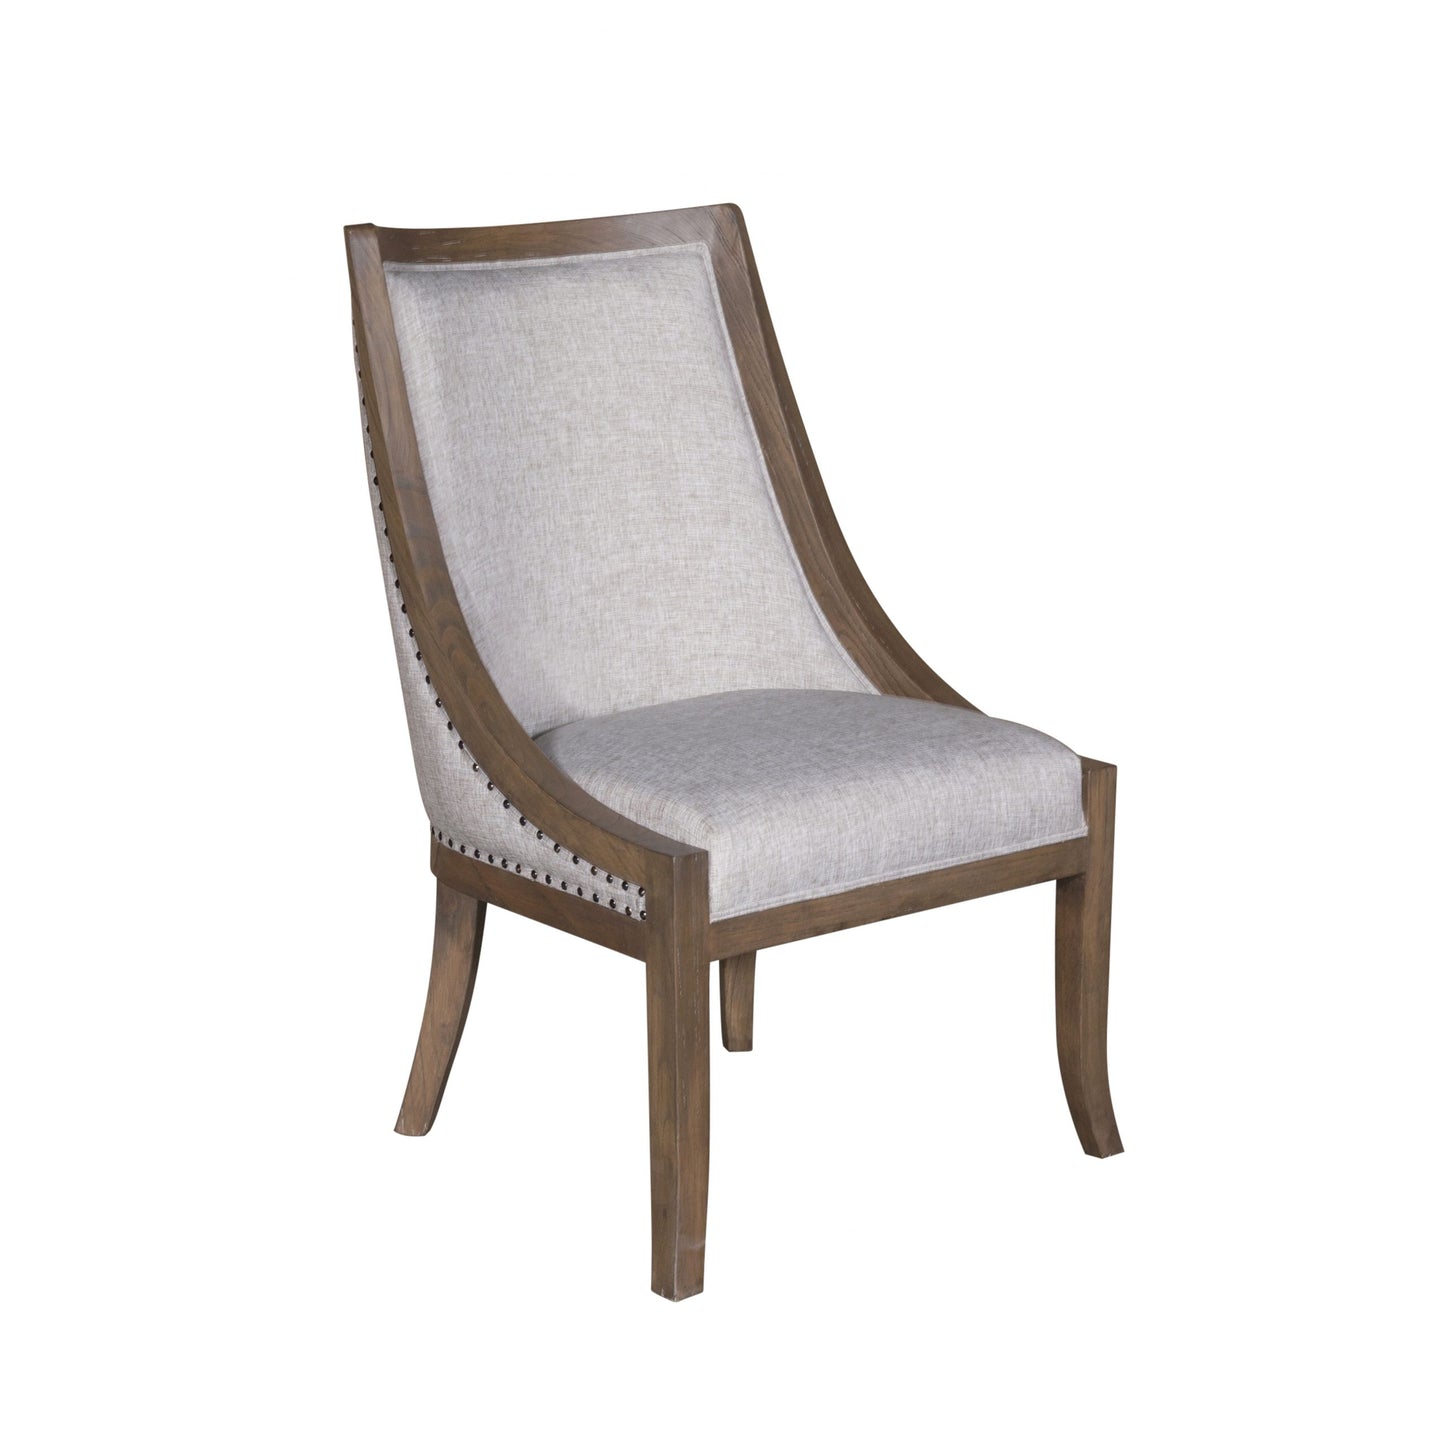 Haxbey Chair – Walnut Finish